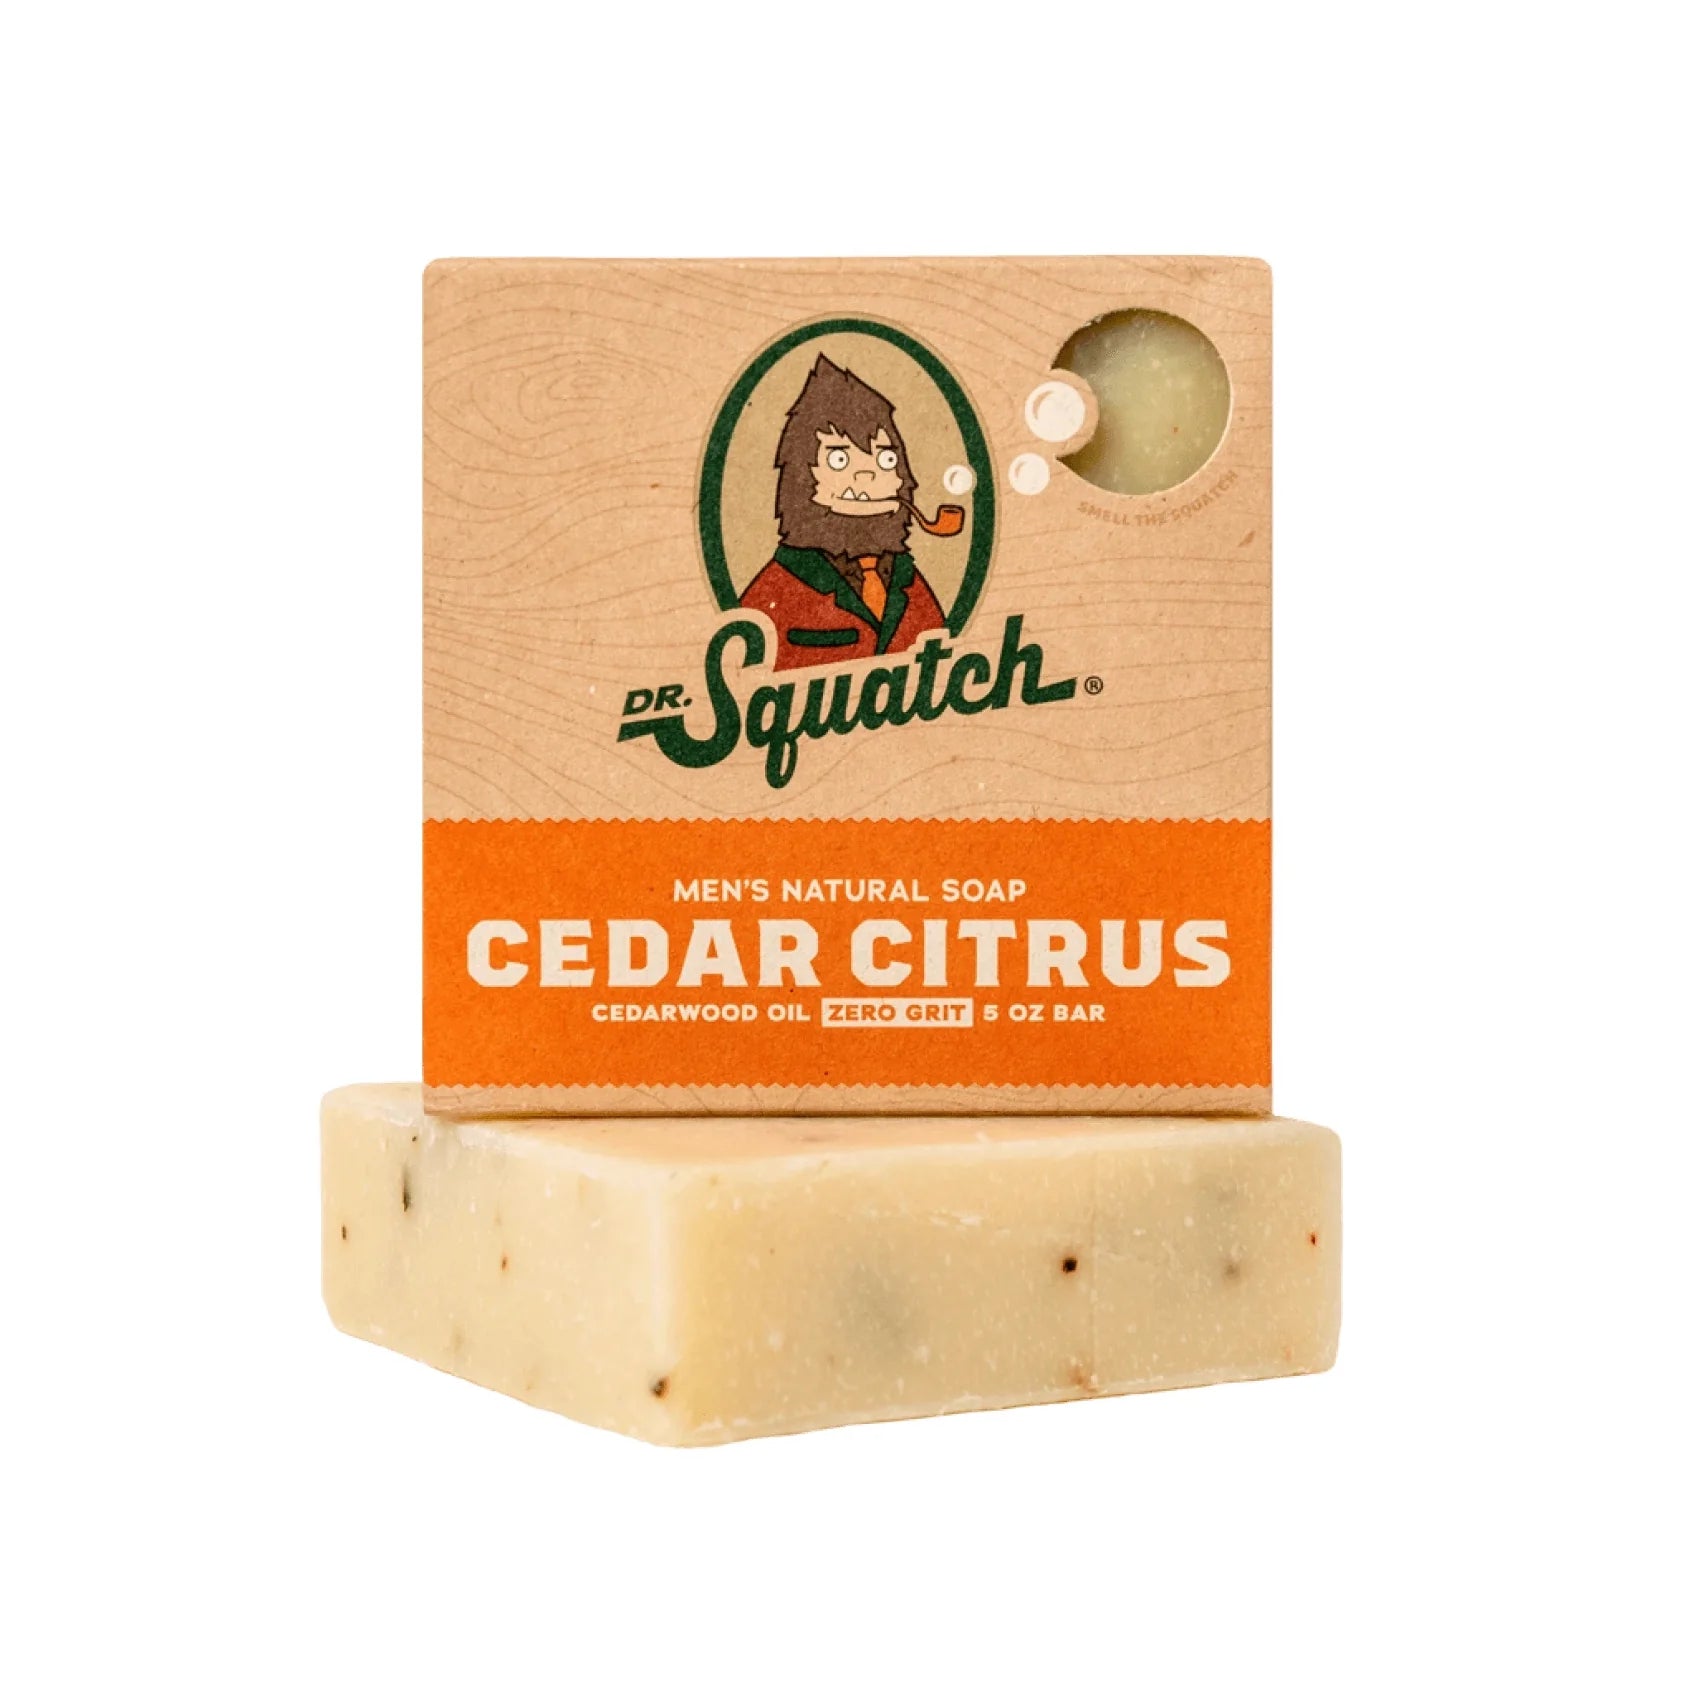 "Cedar Citrus" Dr. Squatch Bar Soap.